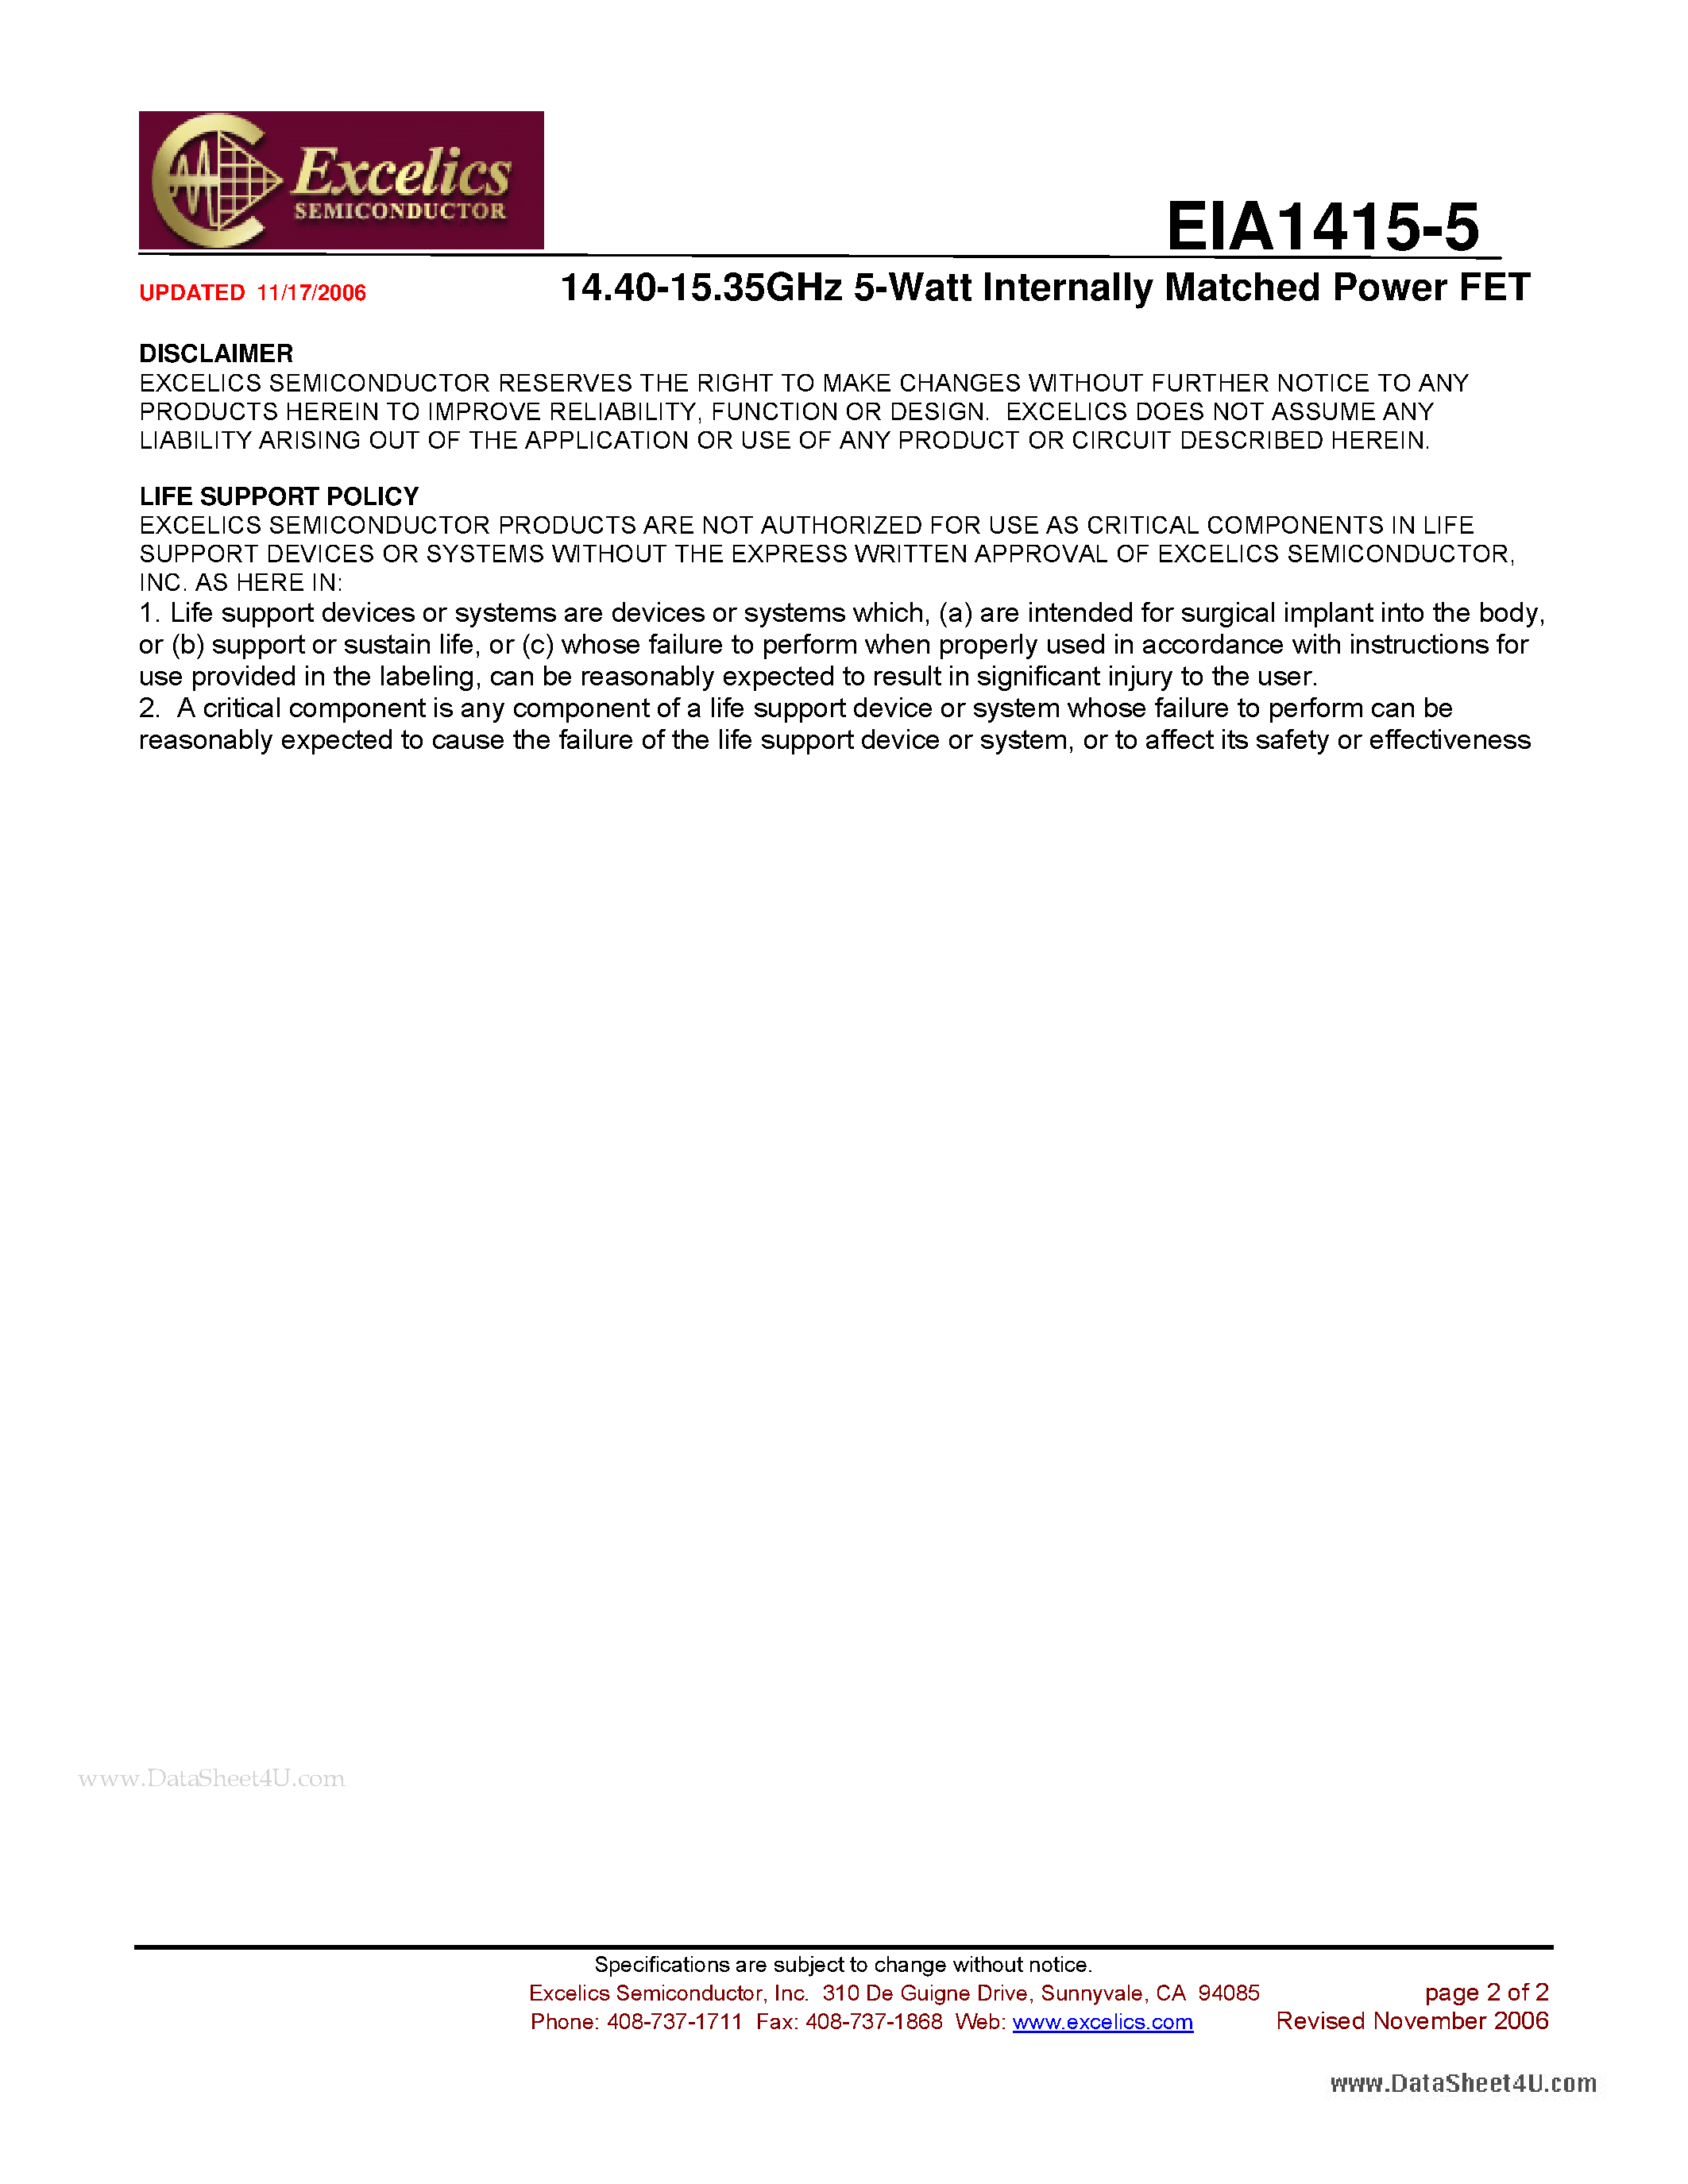 Даташит EIA1415-5 - 14.40-15.35GHz 5-Watt Internally Matched Power FET страница 2